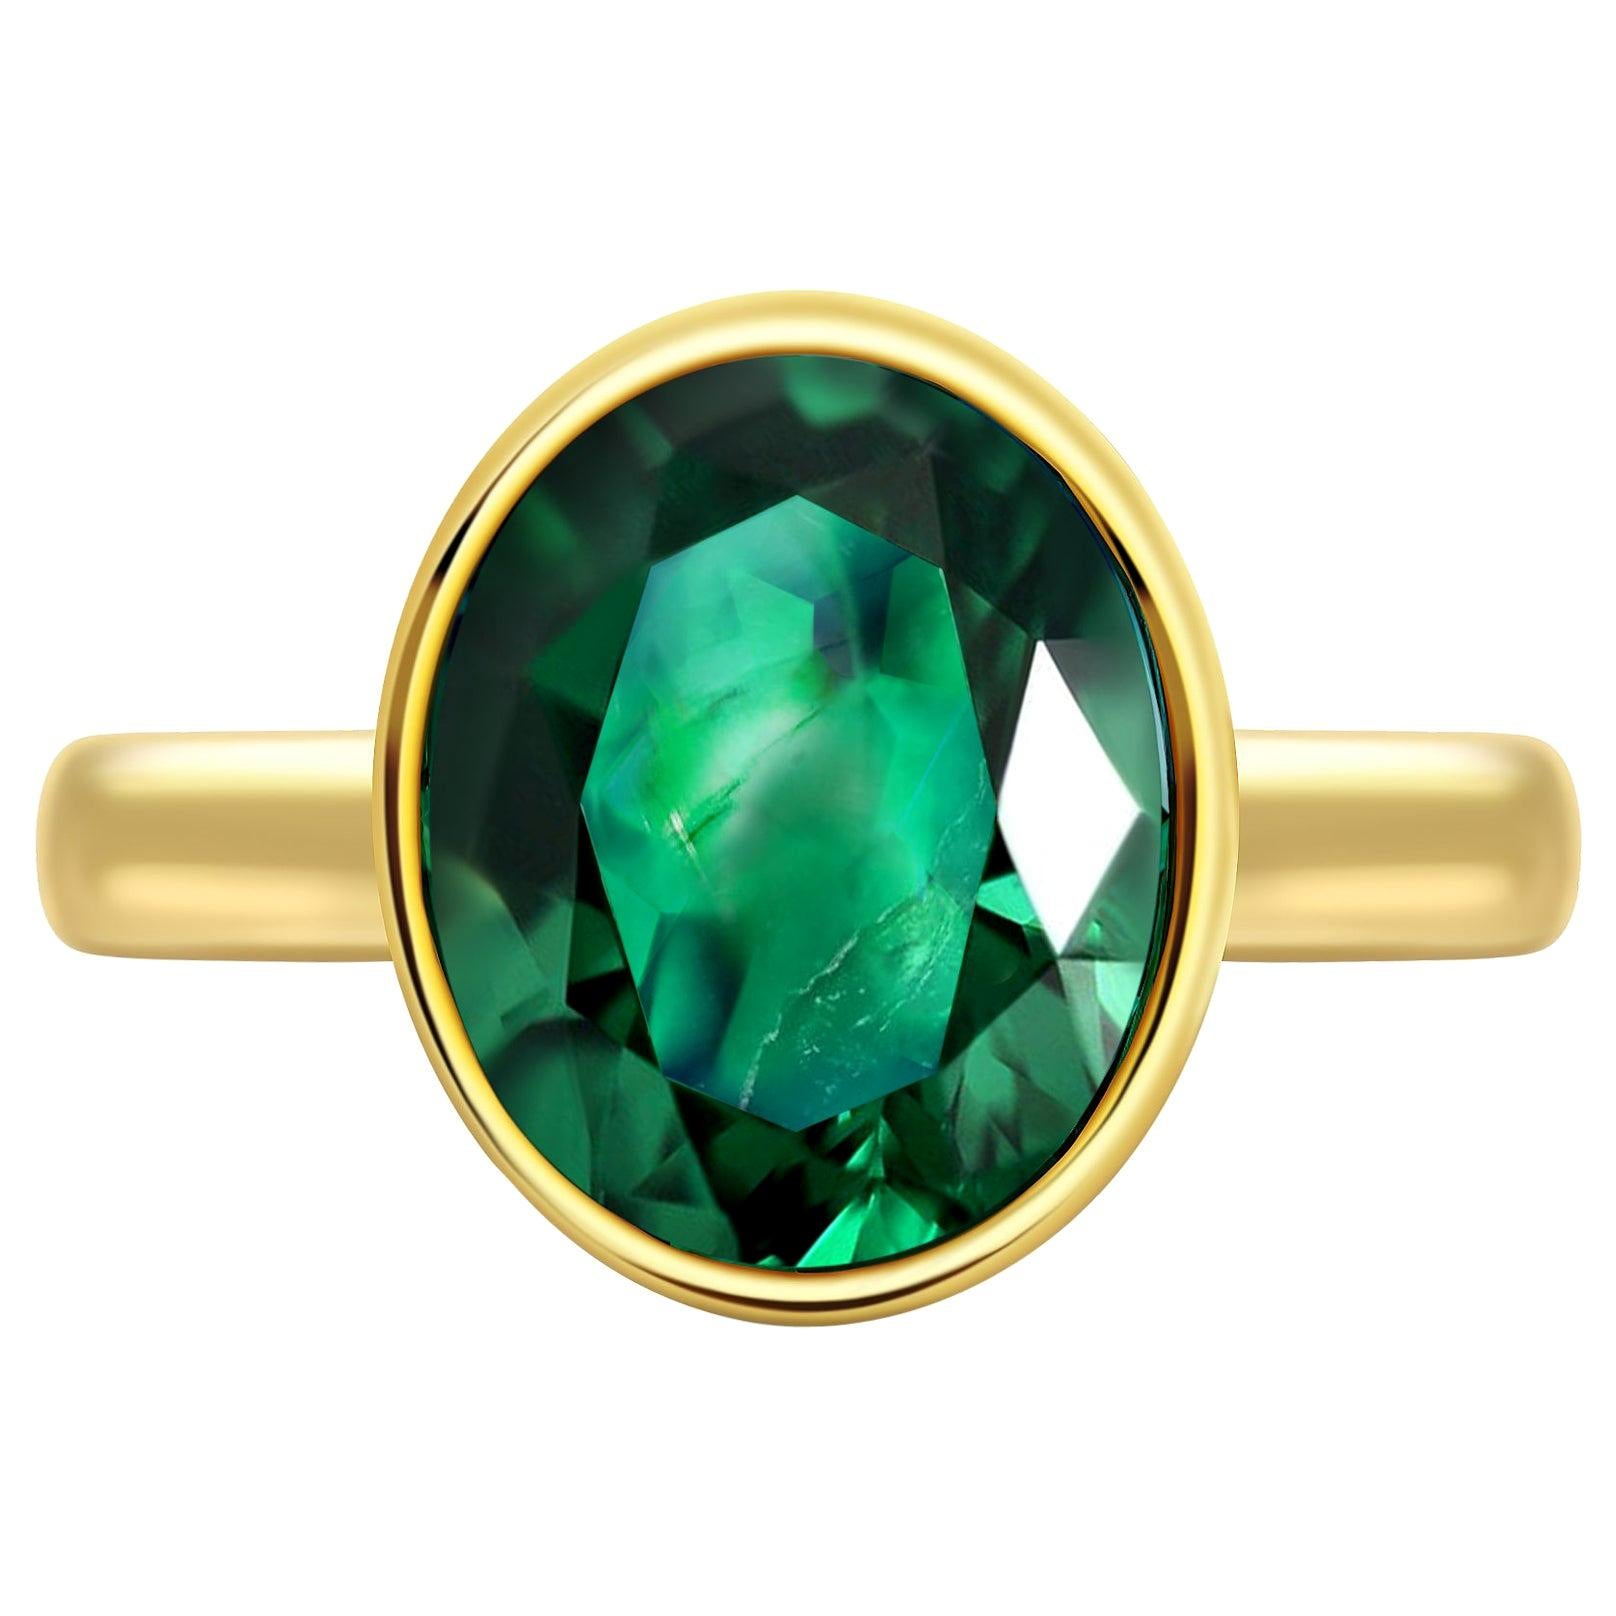 3.94 Carat Intense Green Zambian Emerald 18 Karat Yellow Gold Ring